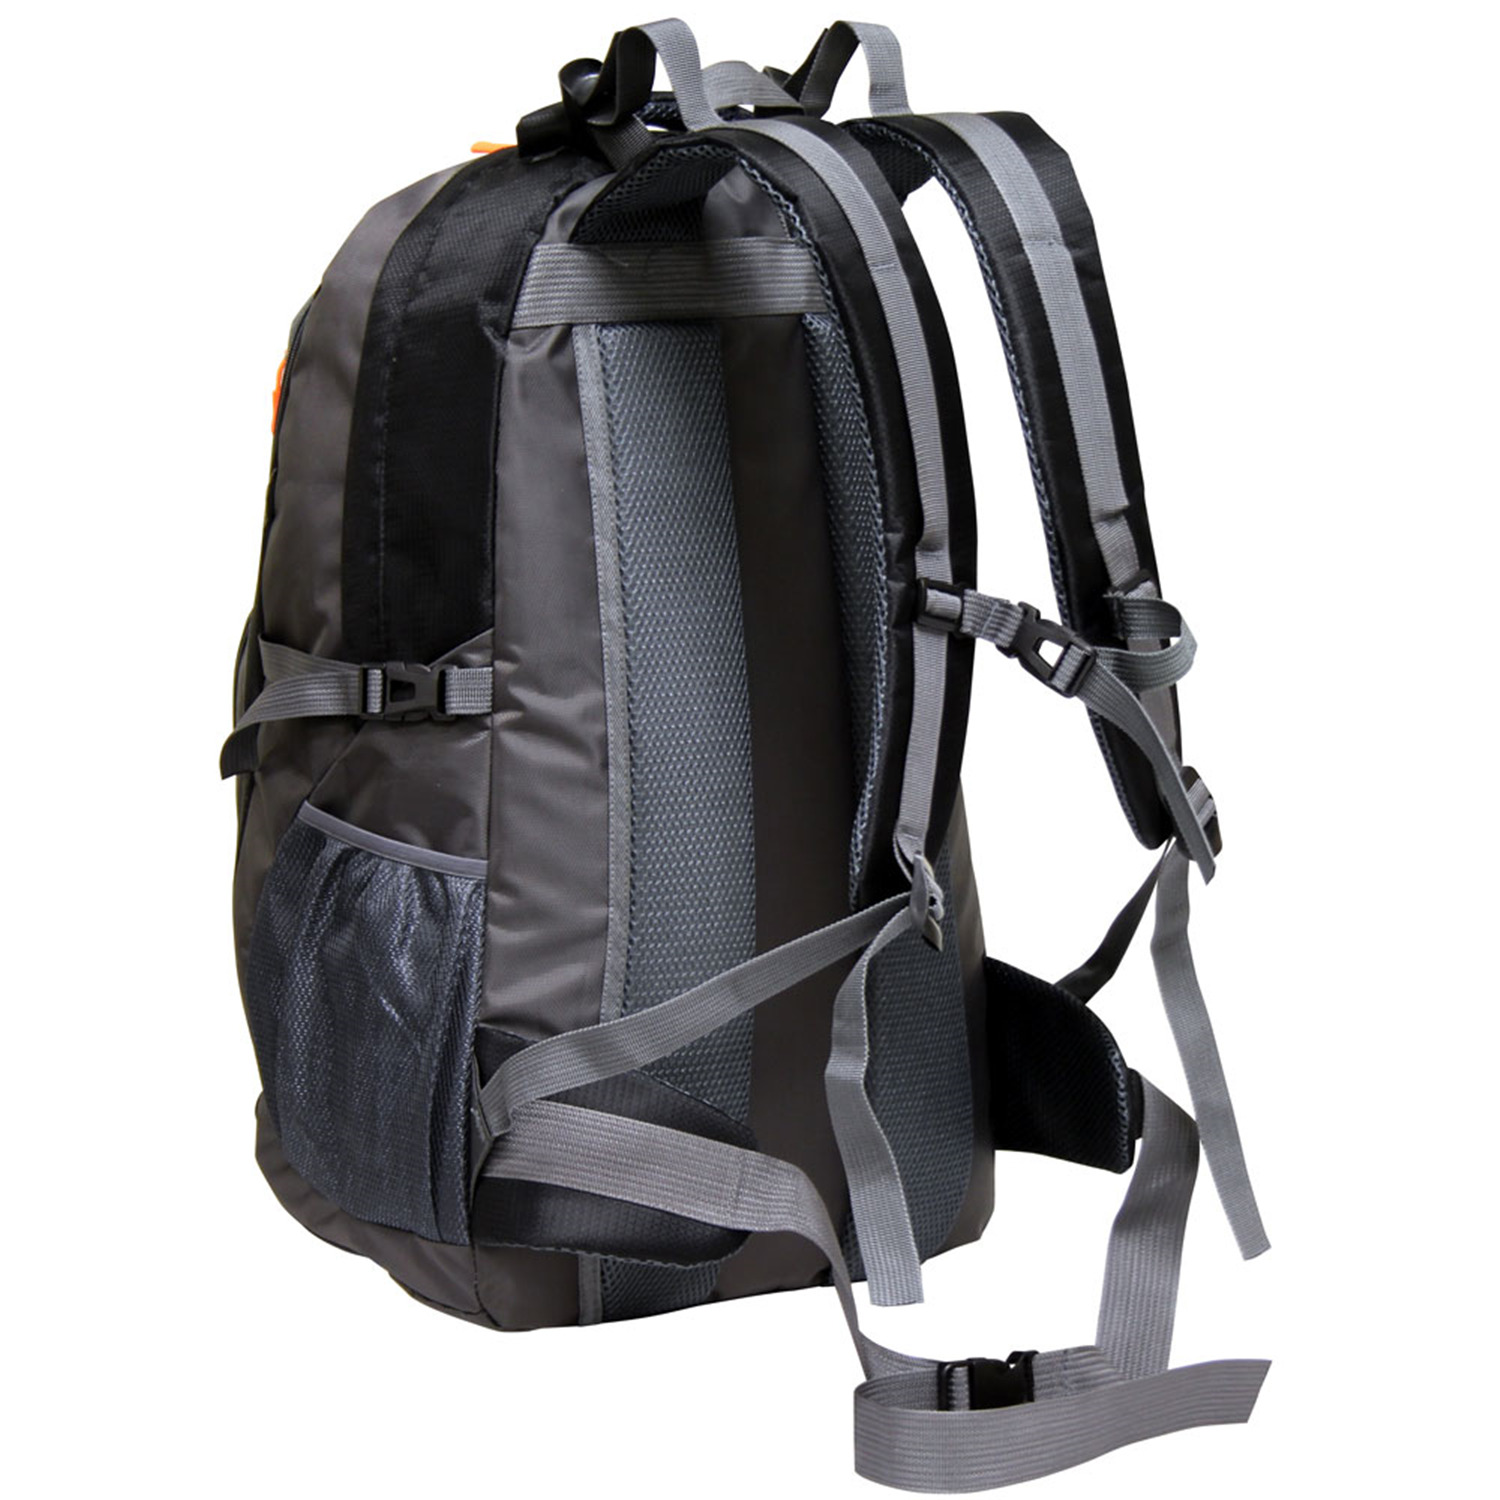 Preferred Nation Nomad Adventure Backpack - image 2 of 2